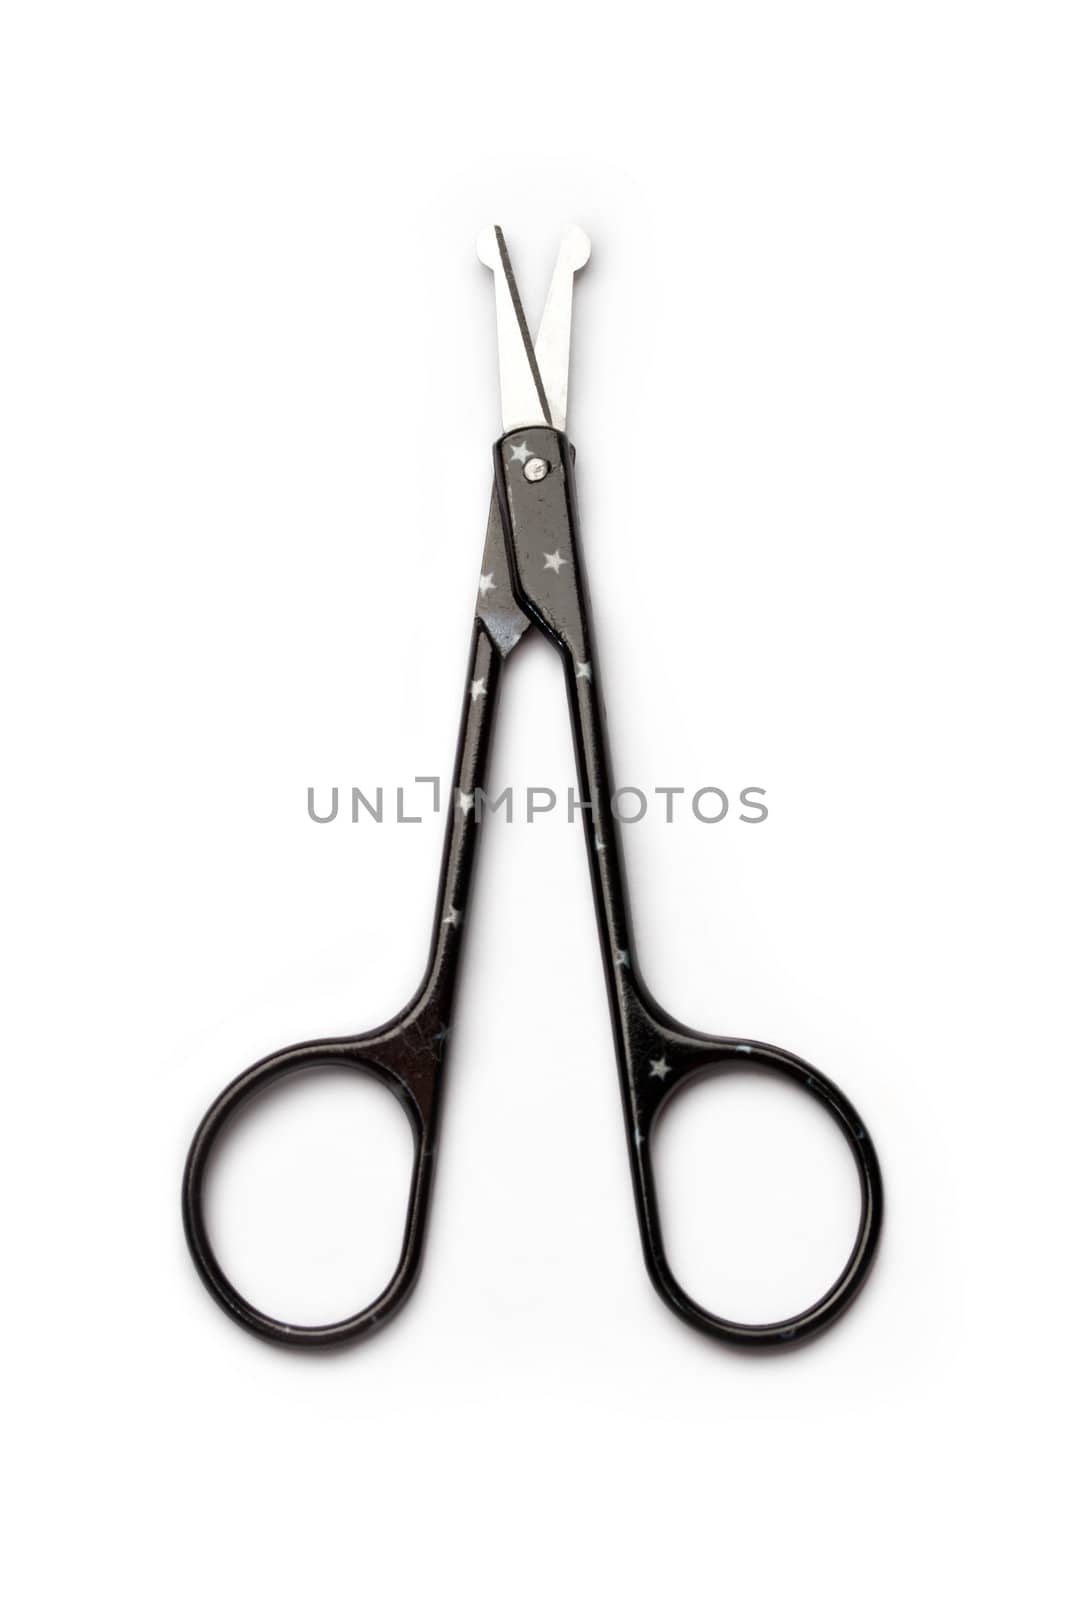 Manicure scissors isolated on white by Garsya